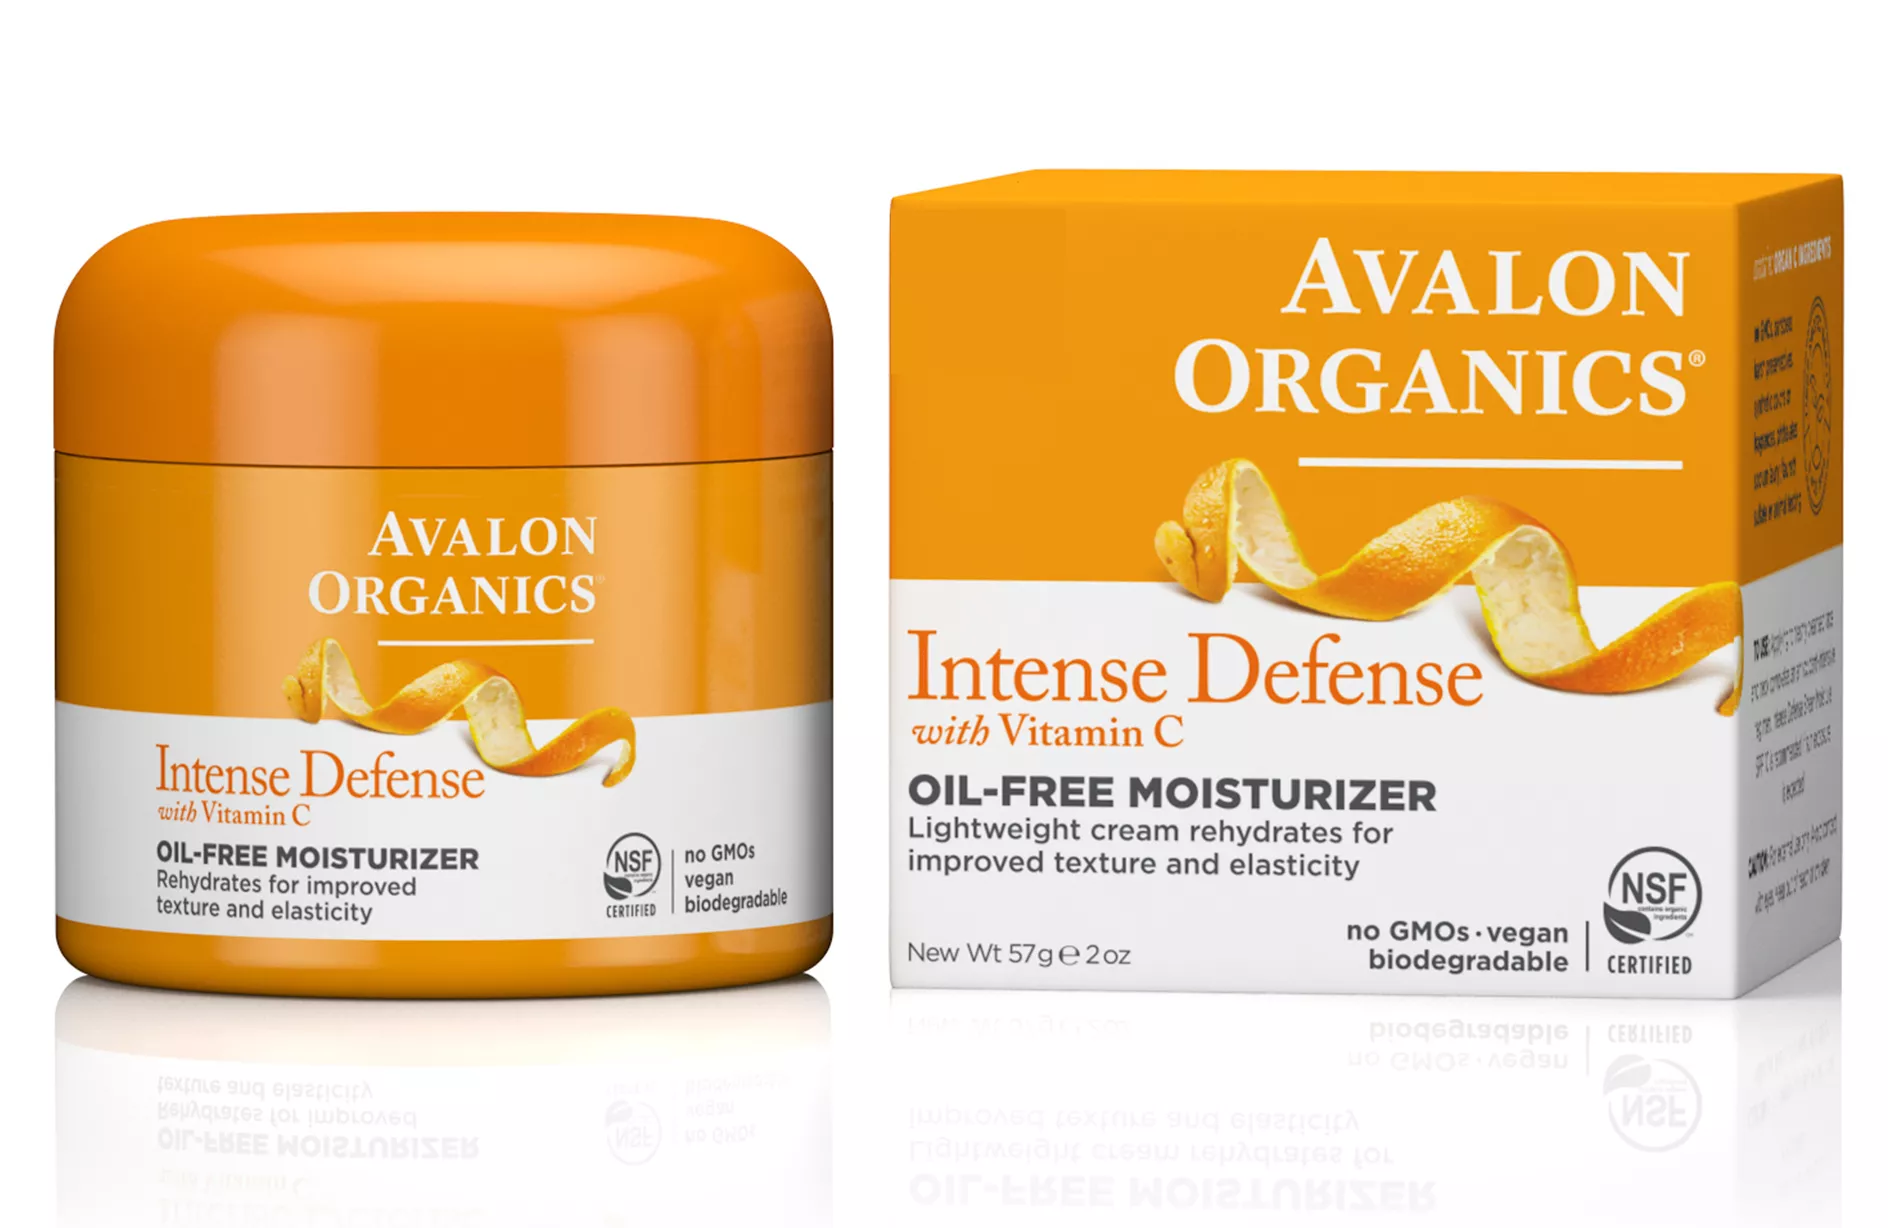 Avalon Organics Intense Defense with Vitamin C